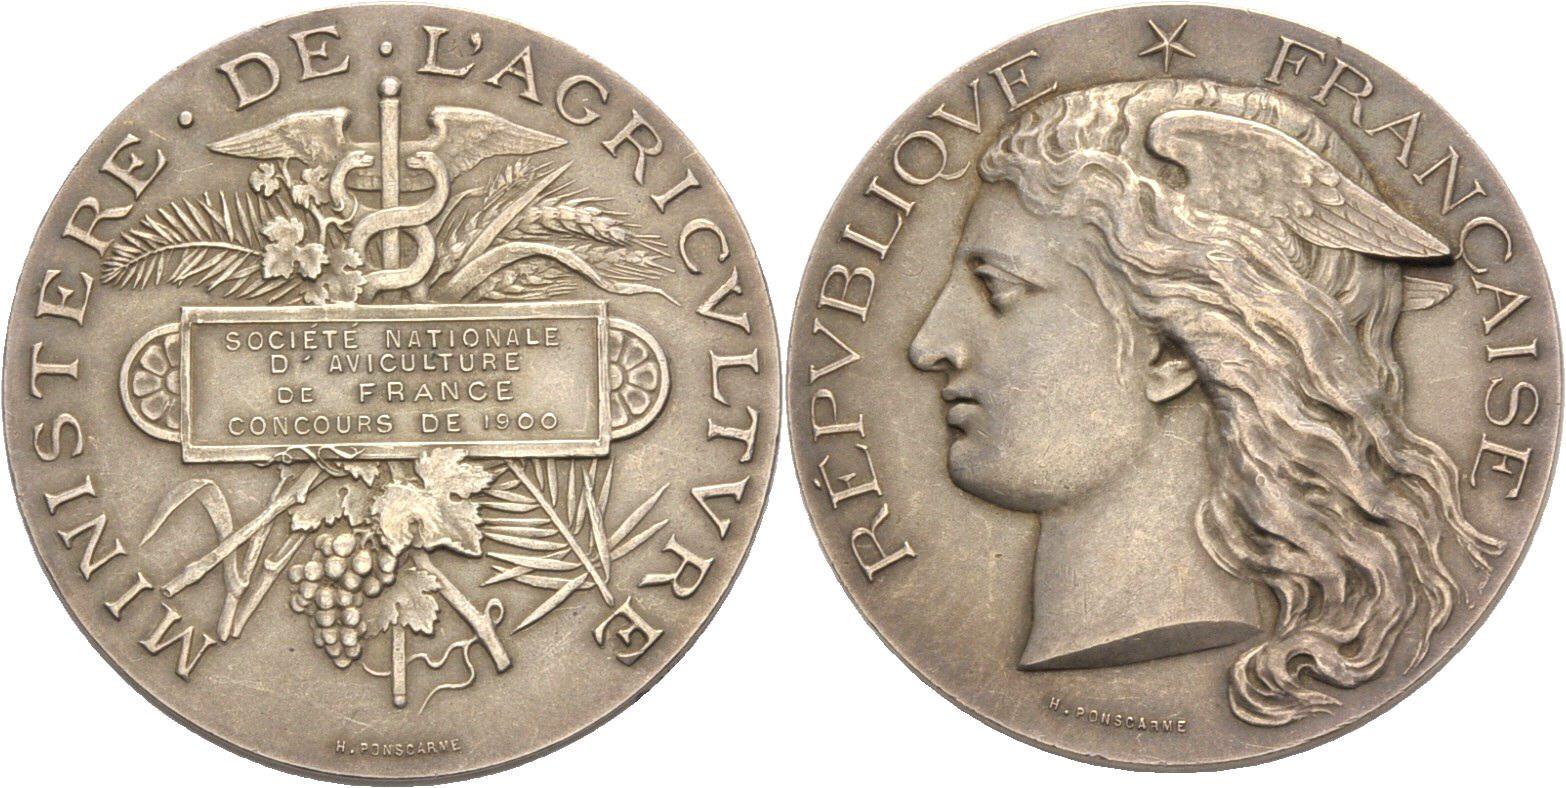 Foto Frankreich, Medaille 1900